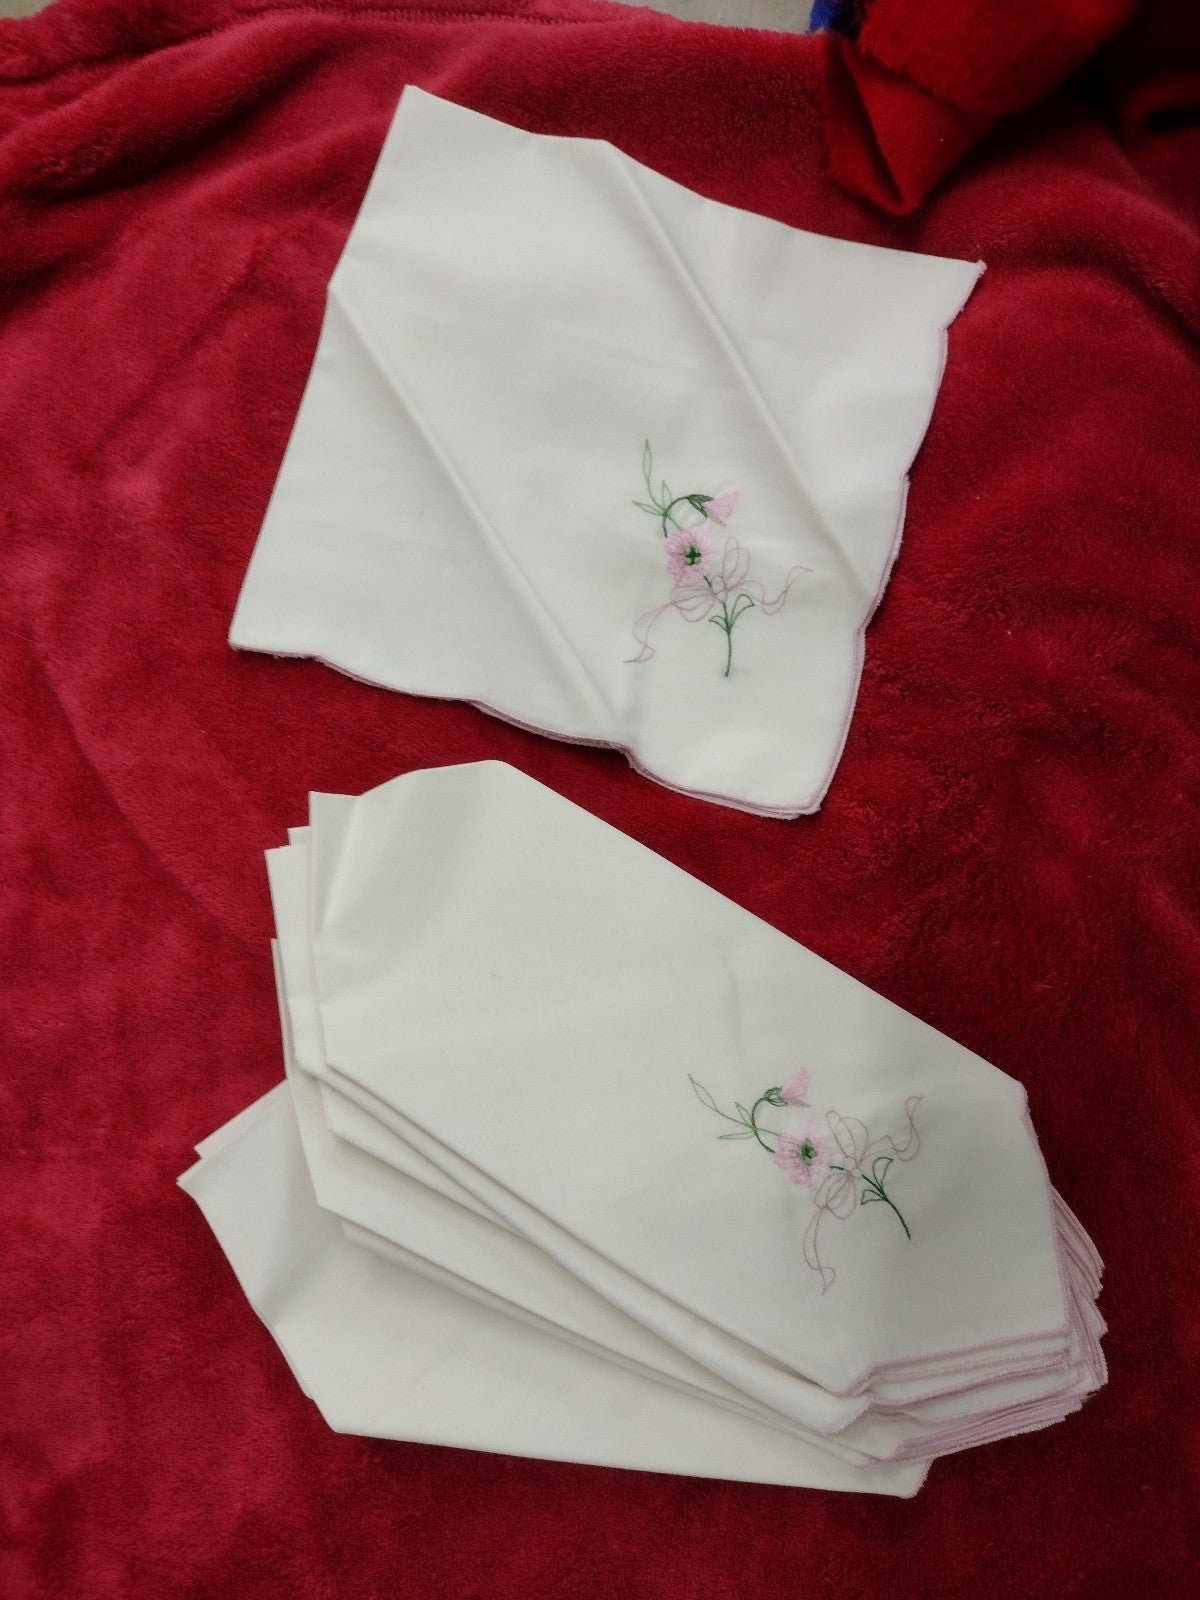 Vintage antique handkerchiefs with floral cross stitch fCVqMf5WH